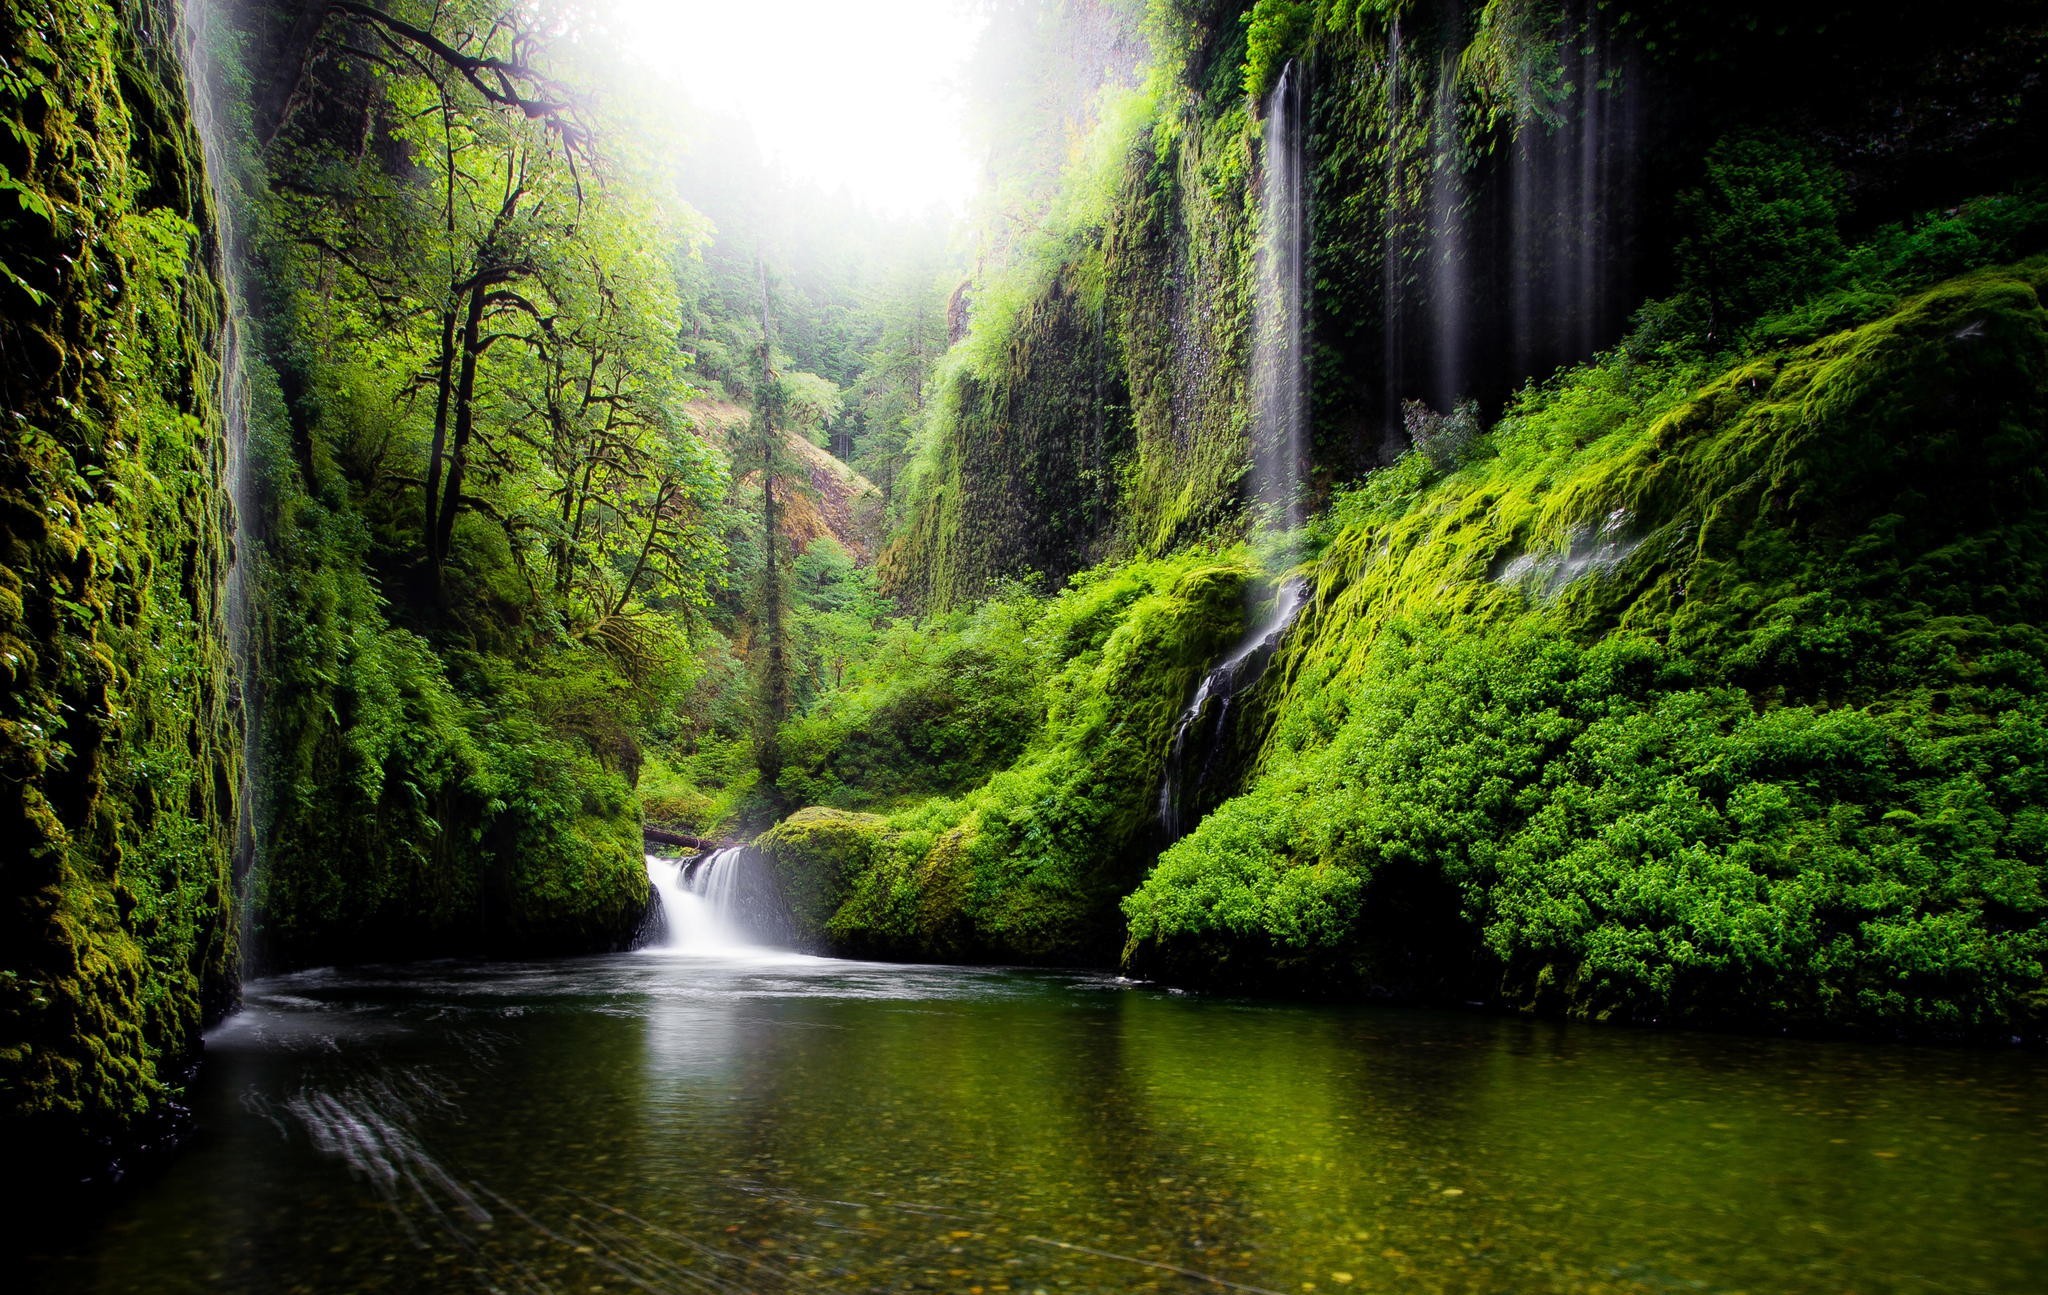 Descarga gratis la imagen Cascadas, Cascada, Bosque, Musgo, Tierra/naturaleza en el escritorio de tu PC